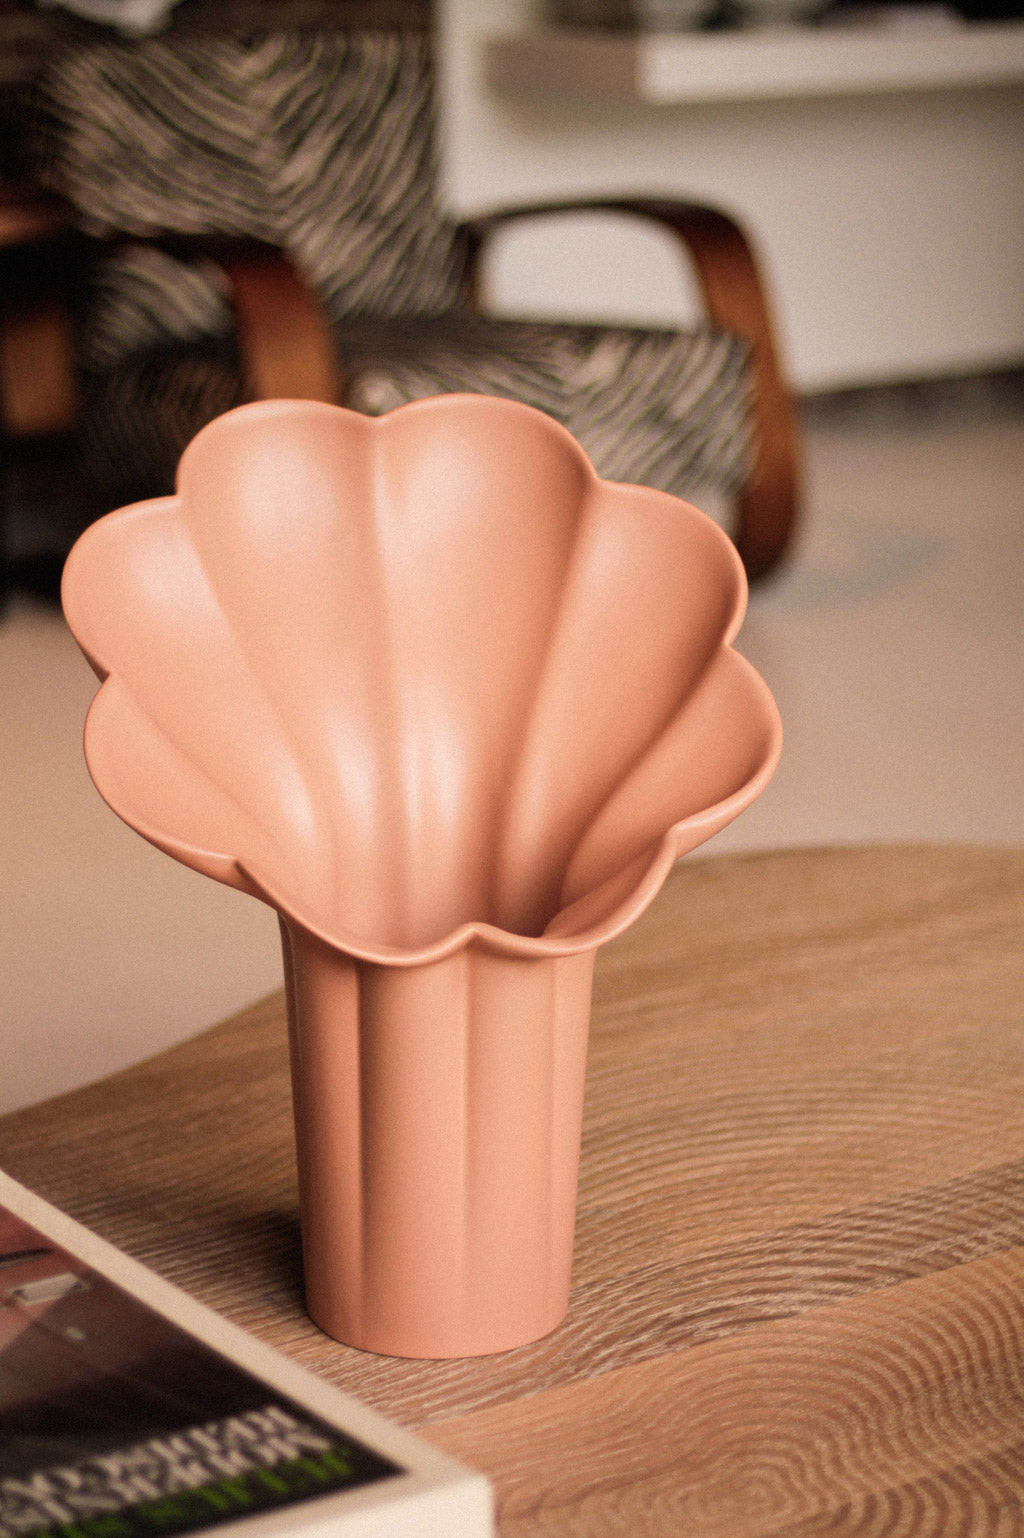 Bottega Bloom Vase - Nude / Pre-Order